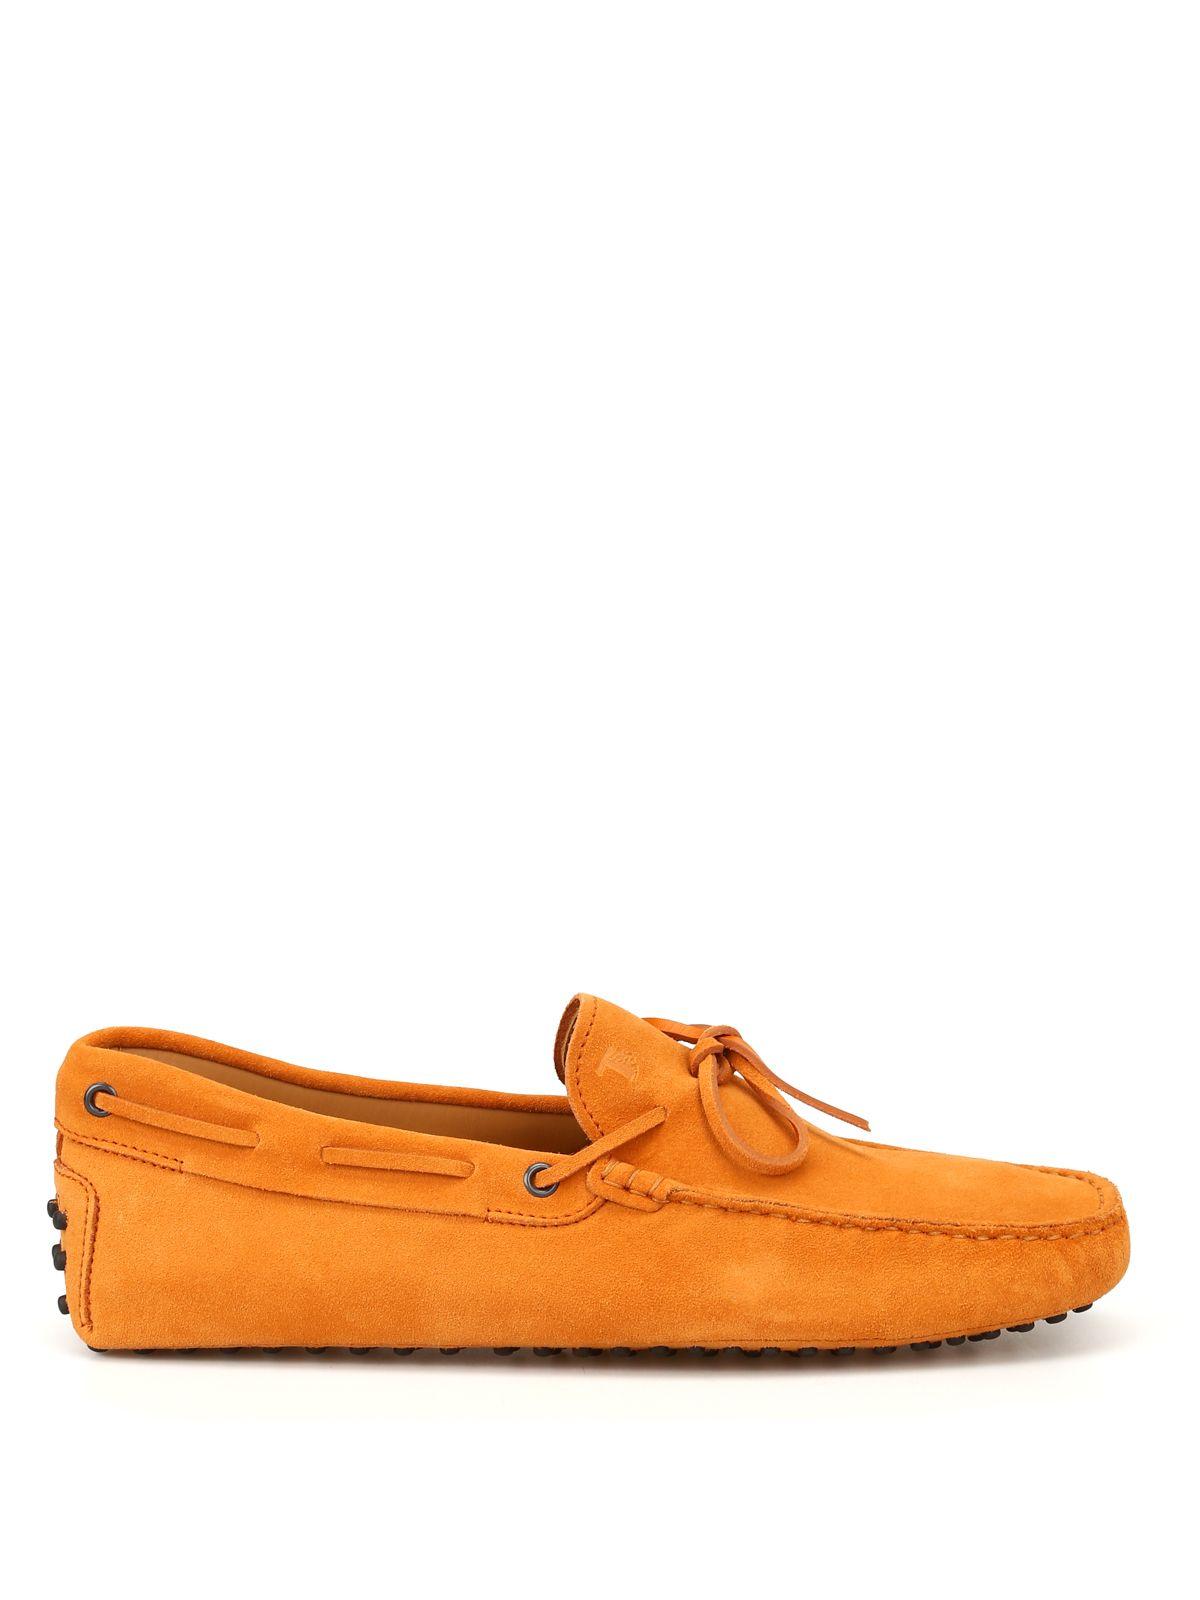 Tod's Orange Suede Loafers in Orange for Men - Lyst